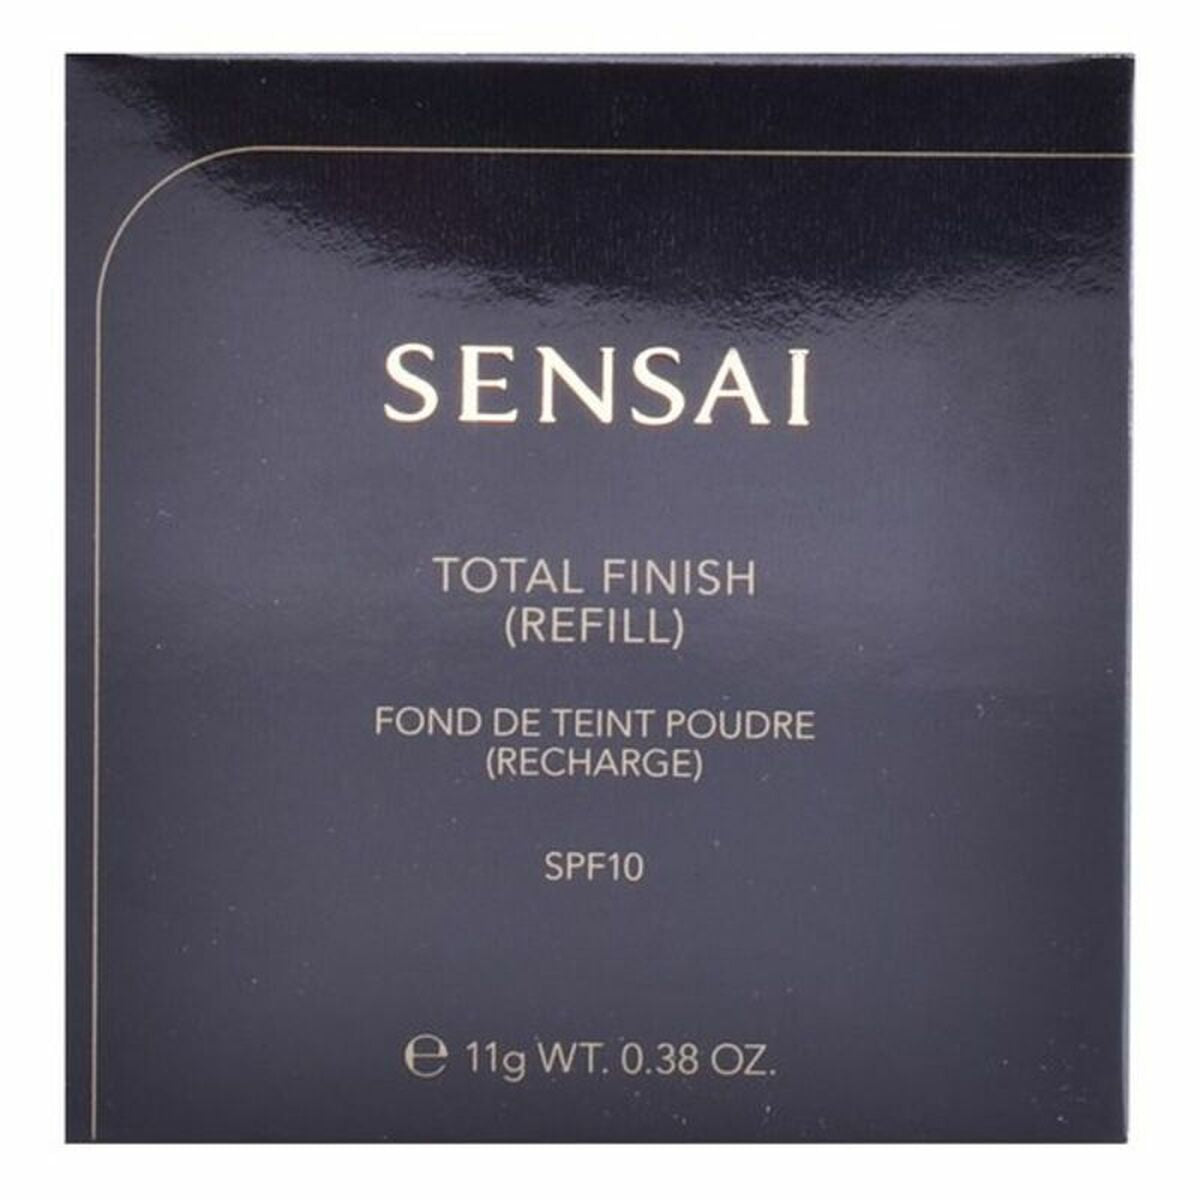 Make-up-Ersatz Sensai Total Finish Kanebo (11 g) - CA International 